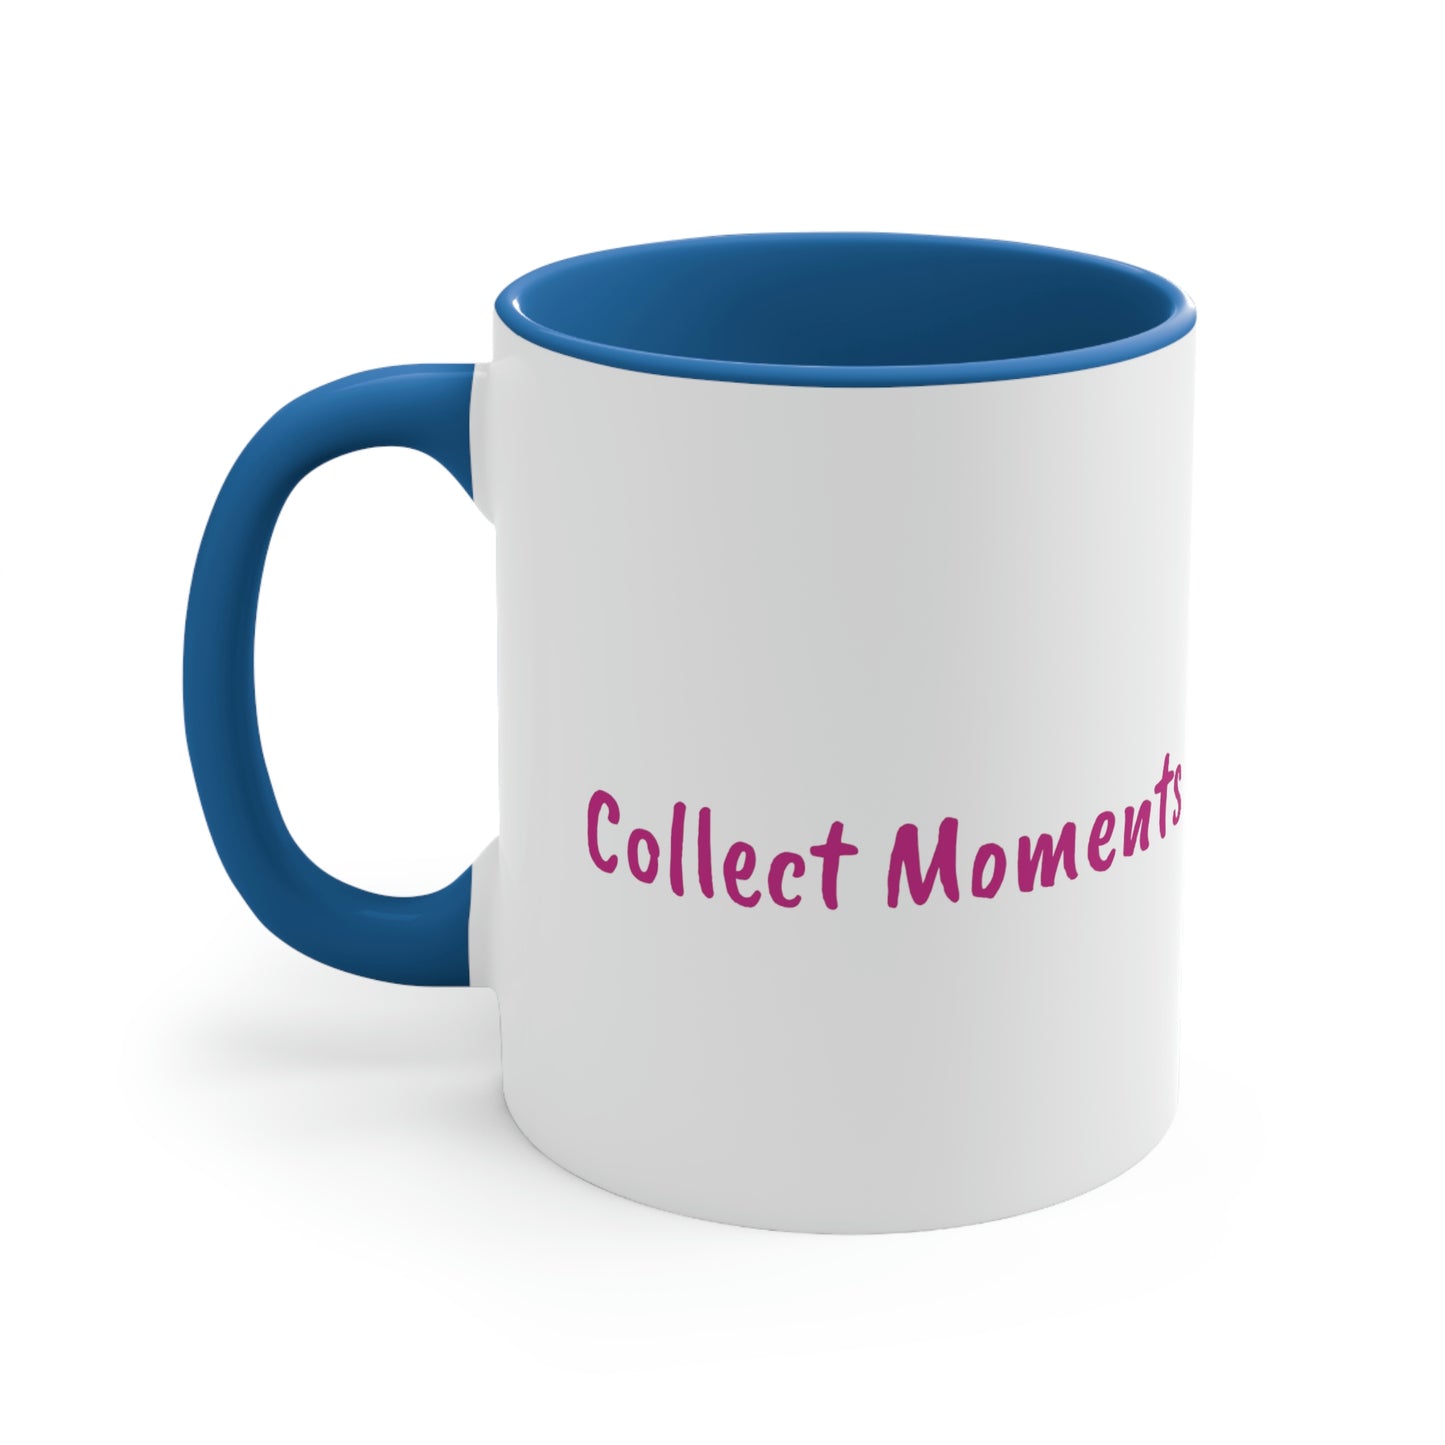 Worry Less Travel More Accent Coffee Mug, 11oz